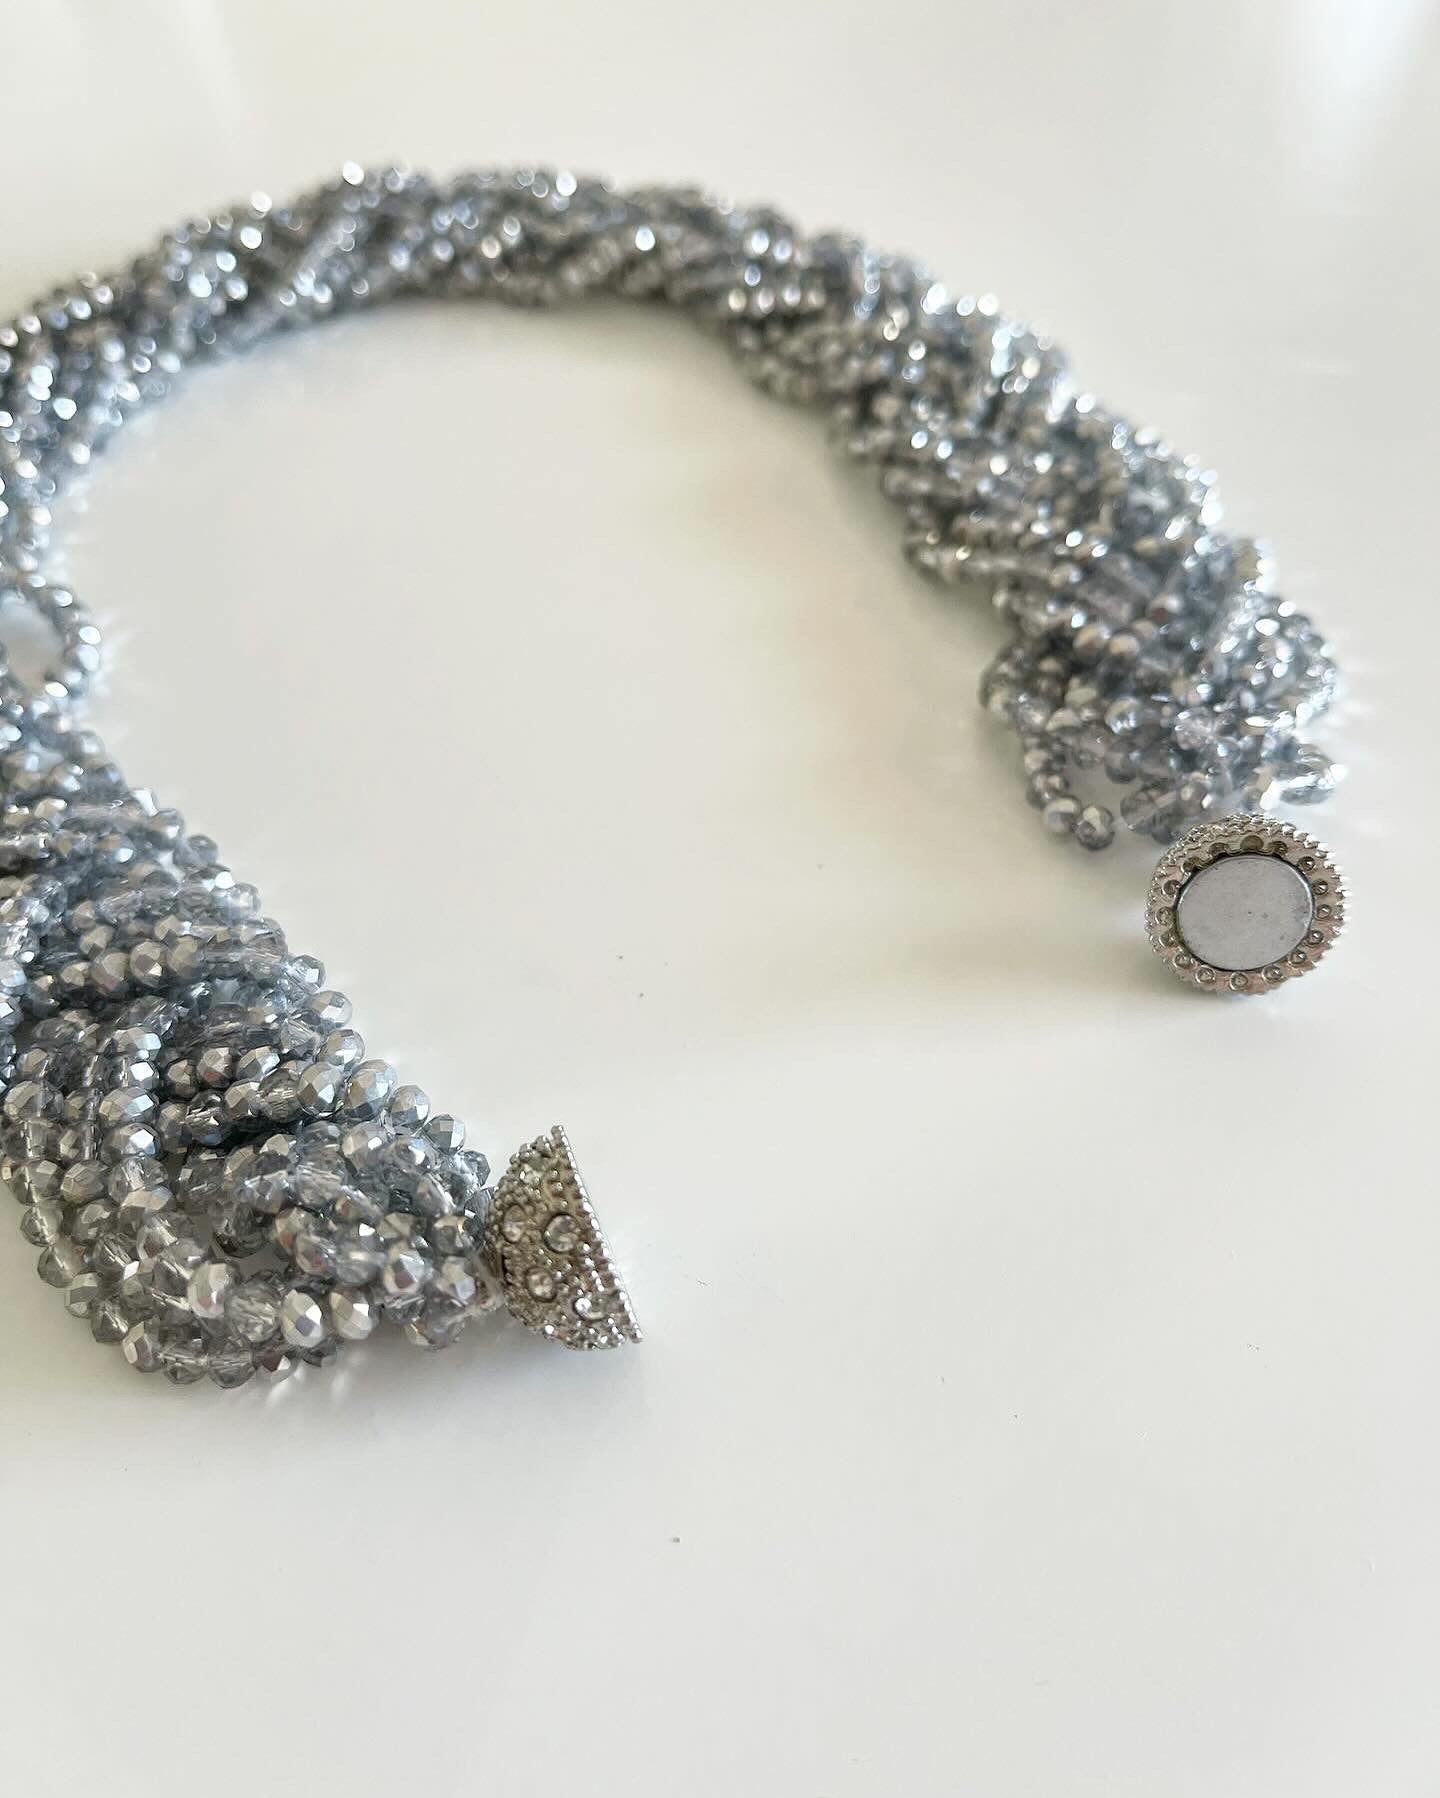 Amazing vintage beads necklace